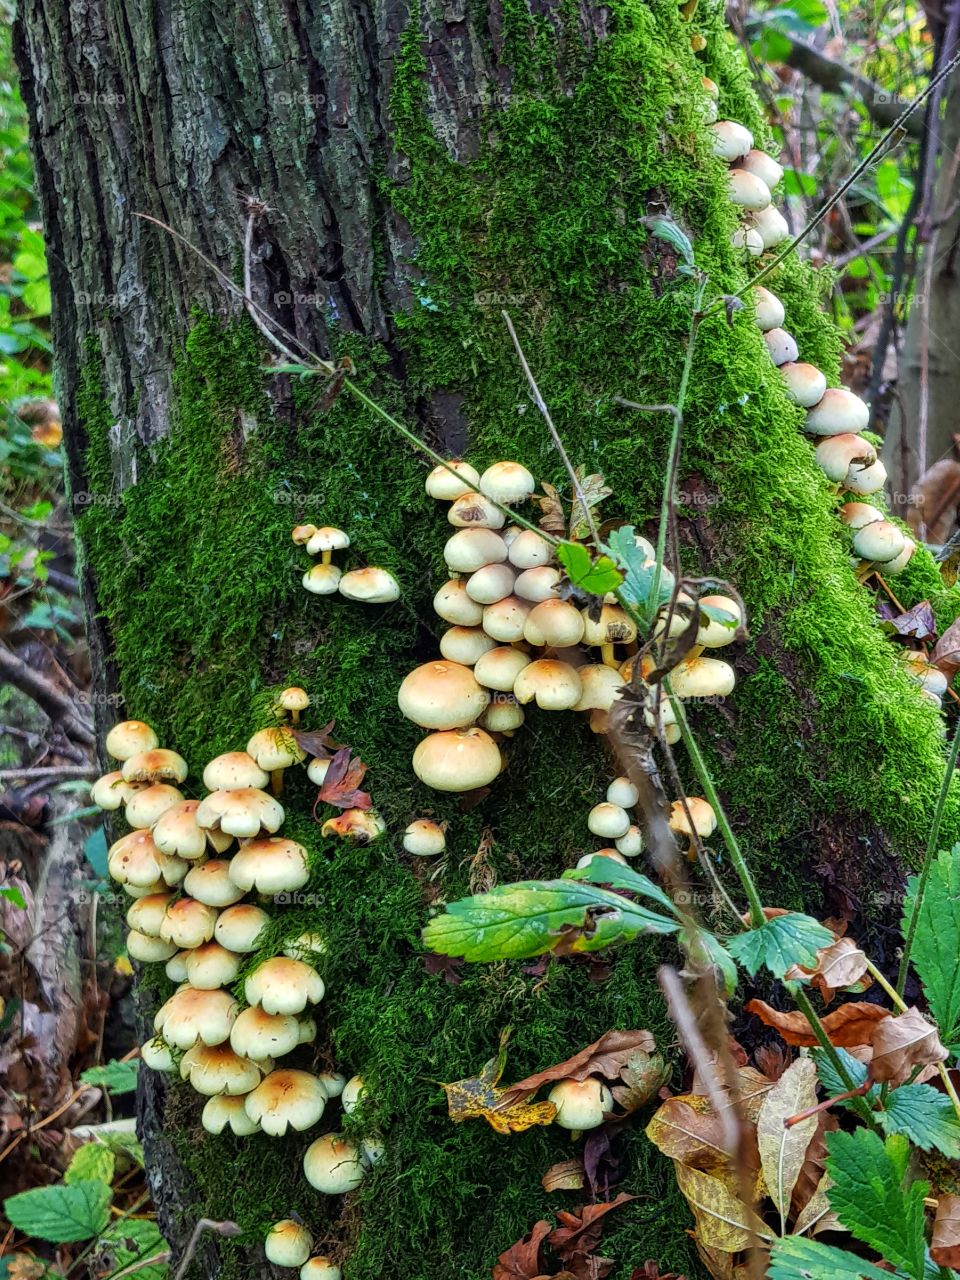 Eaton hills wild mushrooms